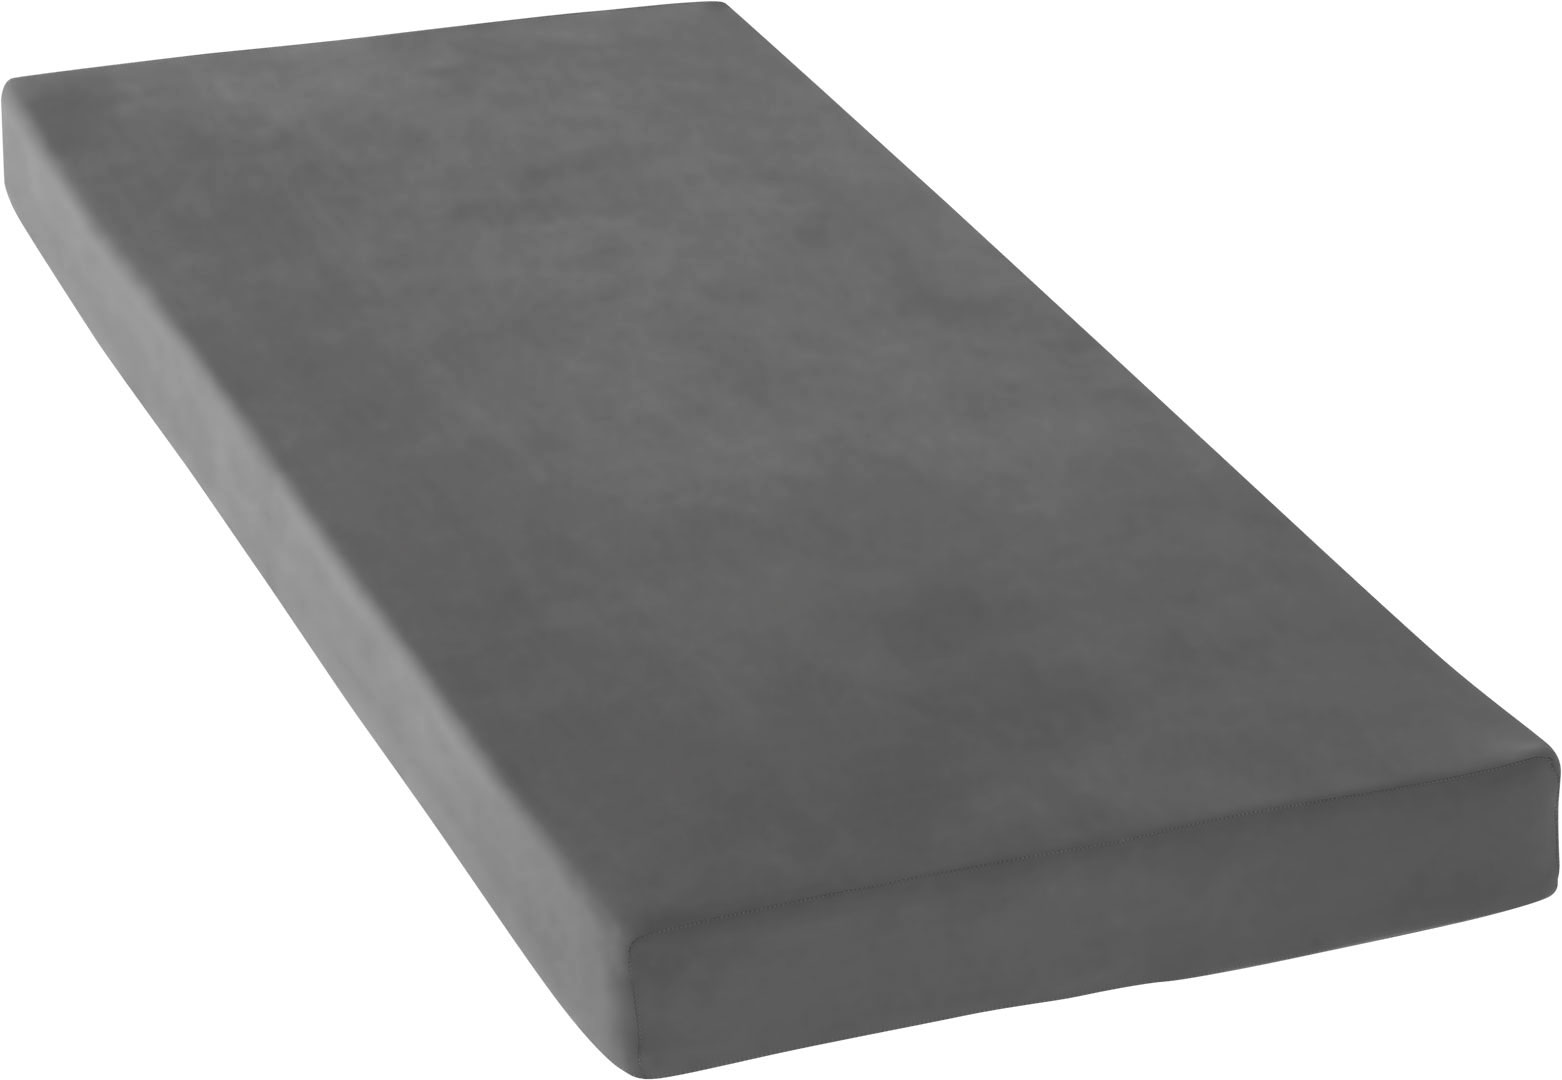 Rolled mattress Sanchi II